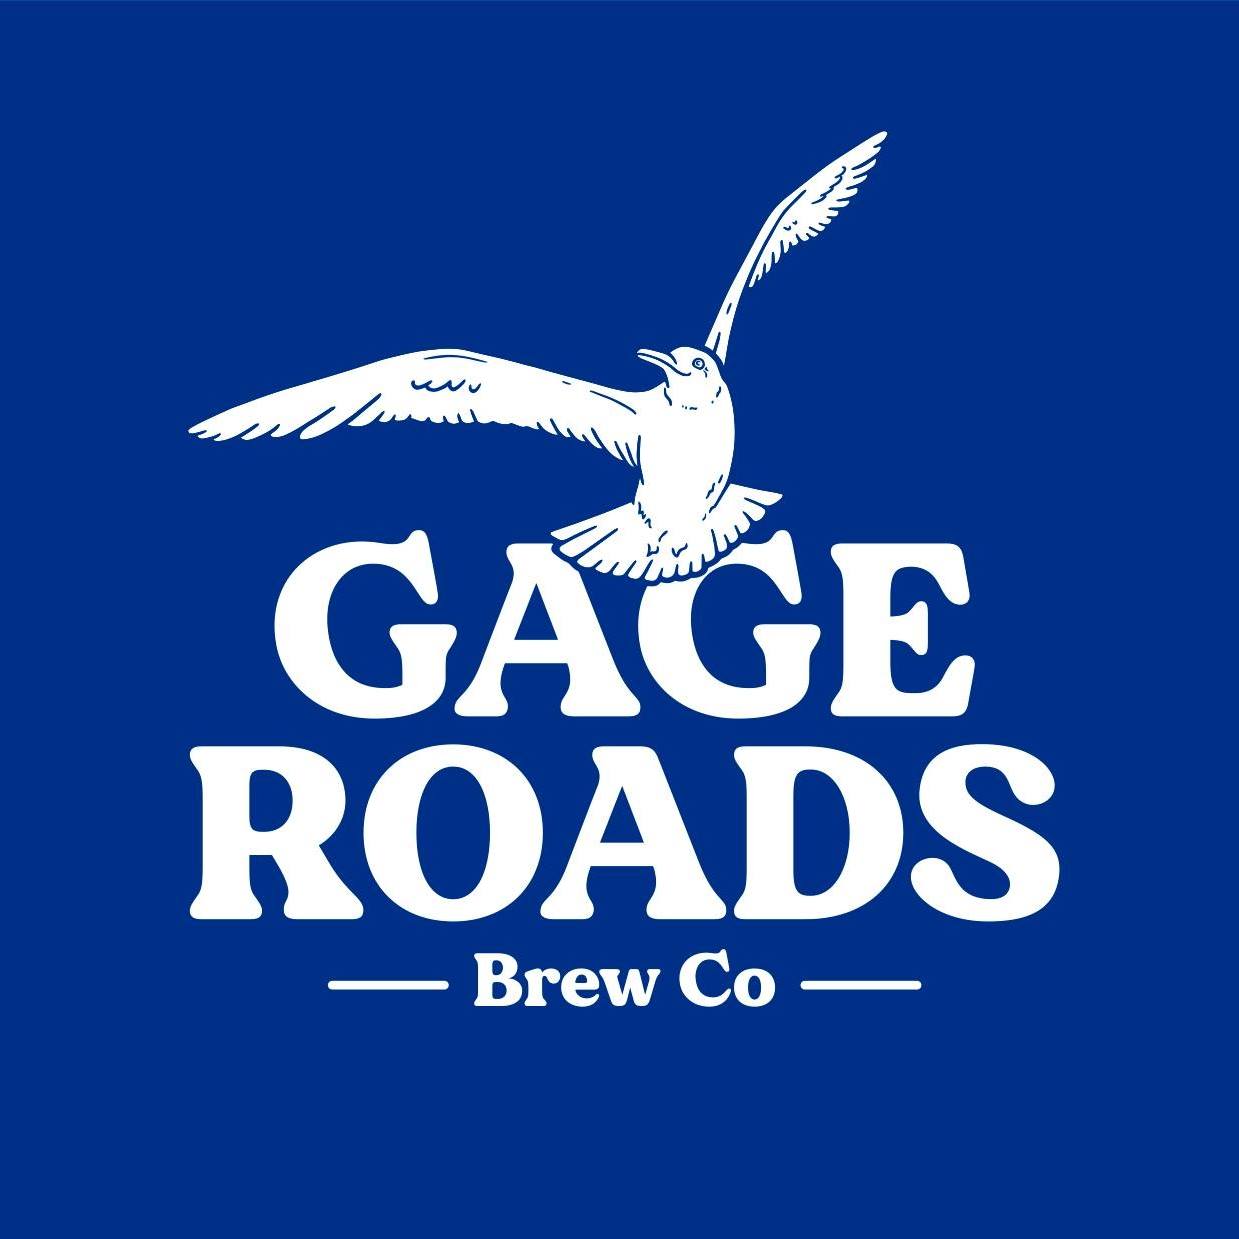 Gage Roads Brew Co.